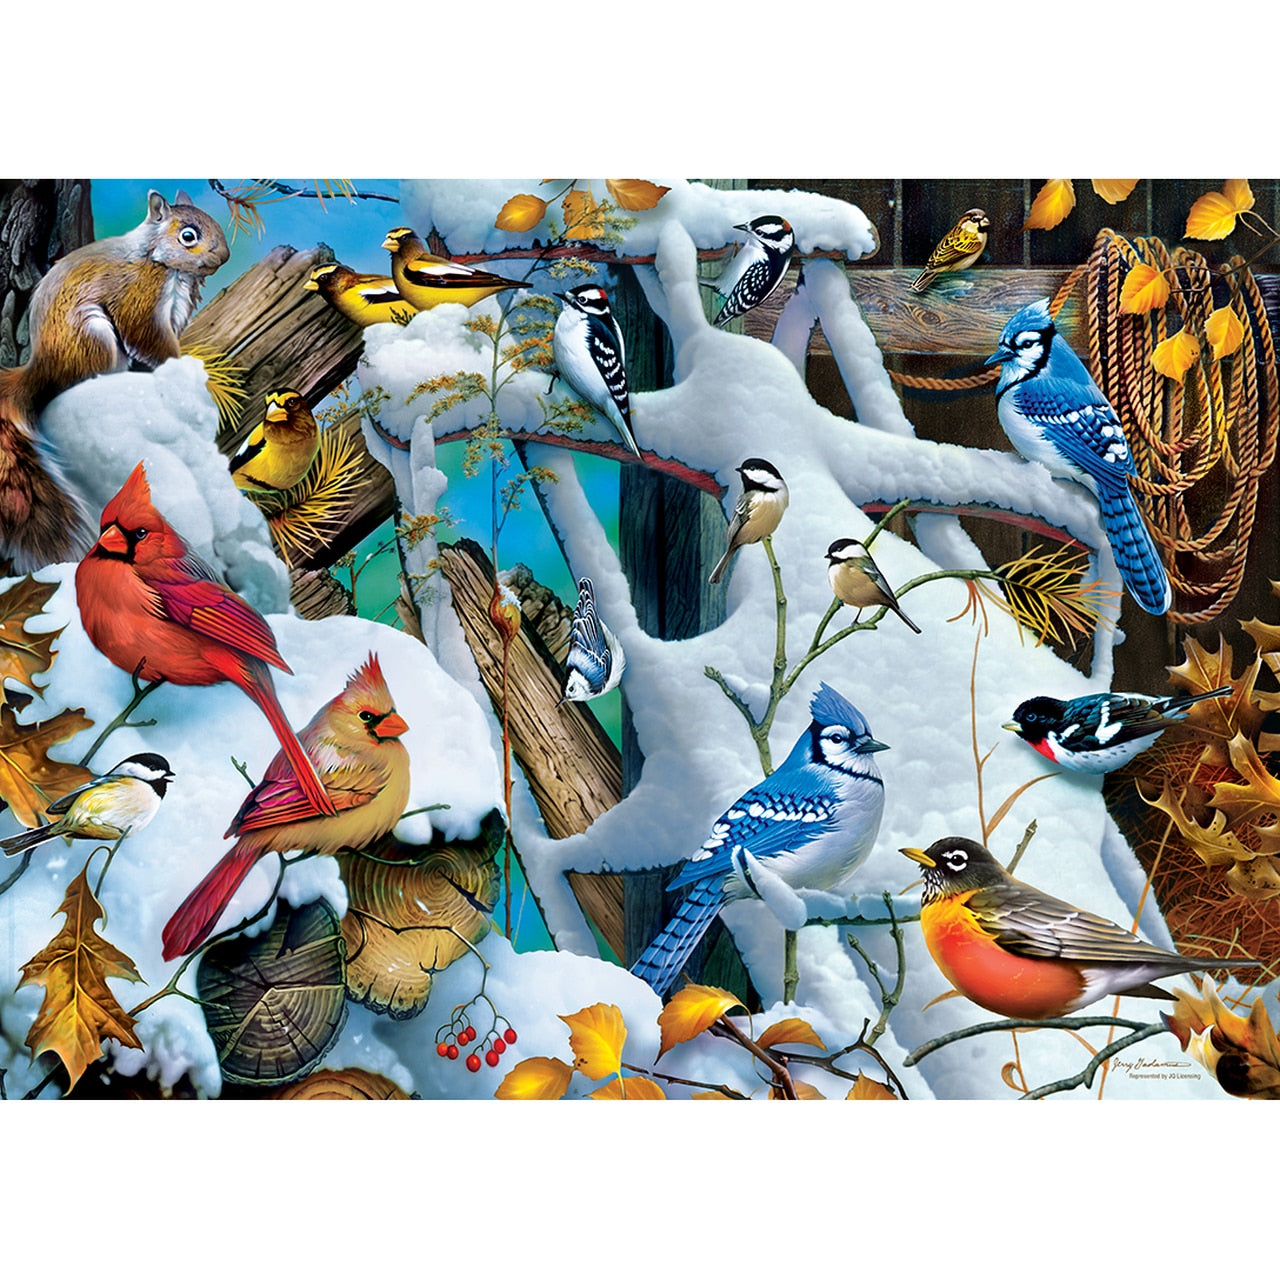 Snow Birds 1000 Piece Audubon Puzzle    